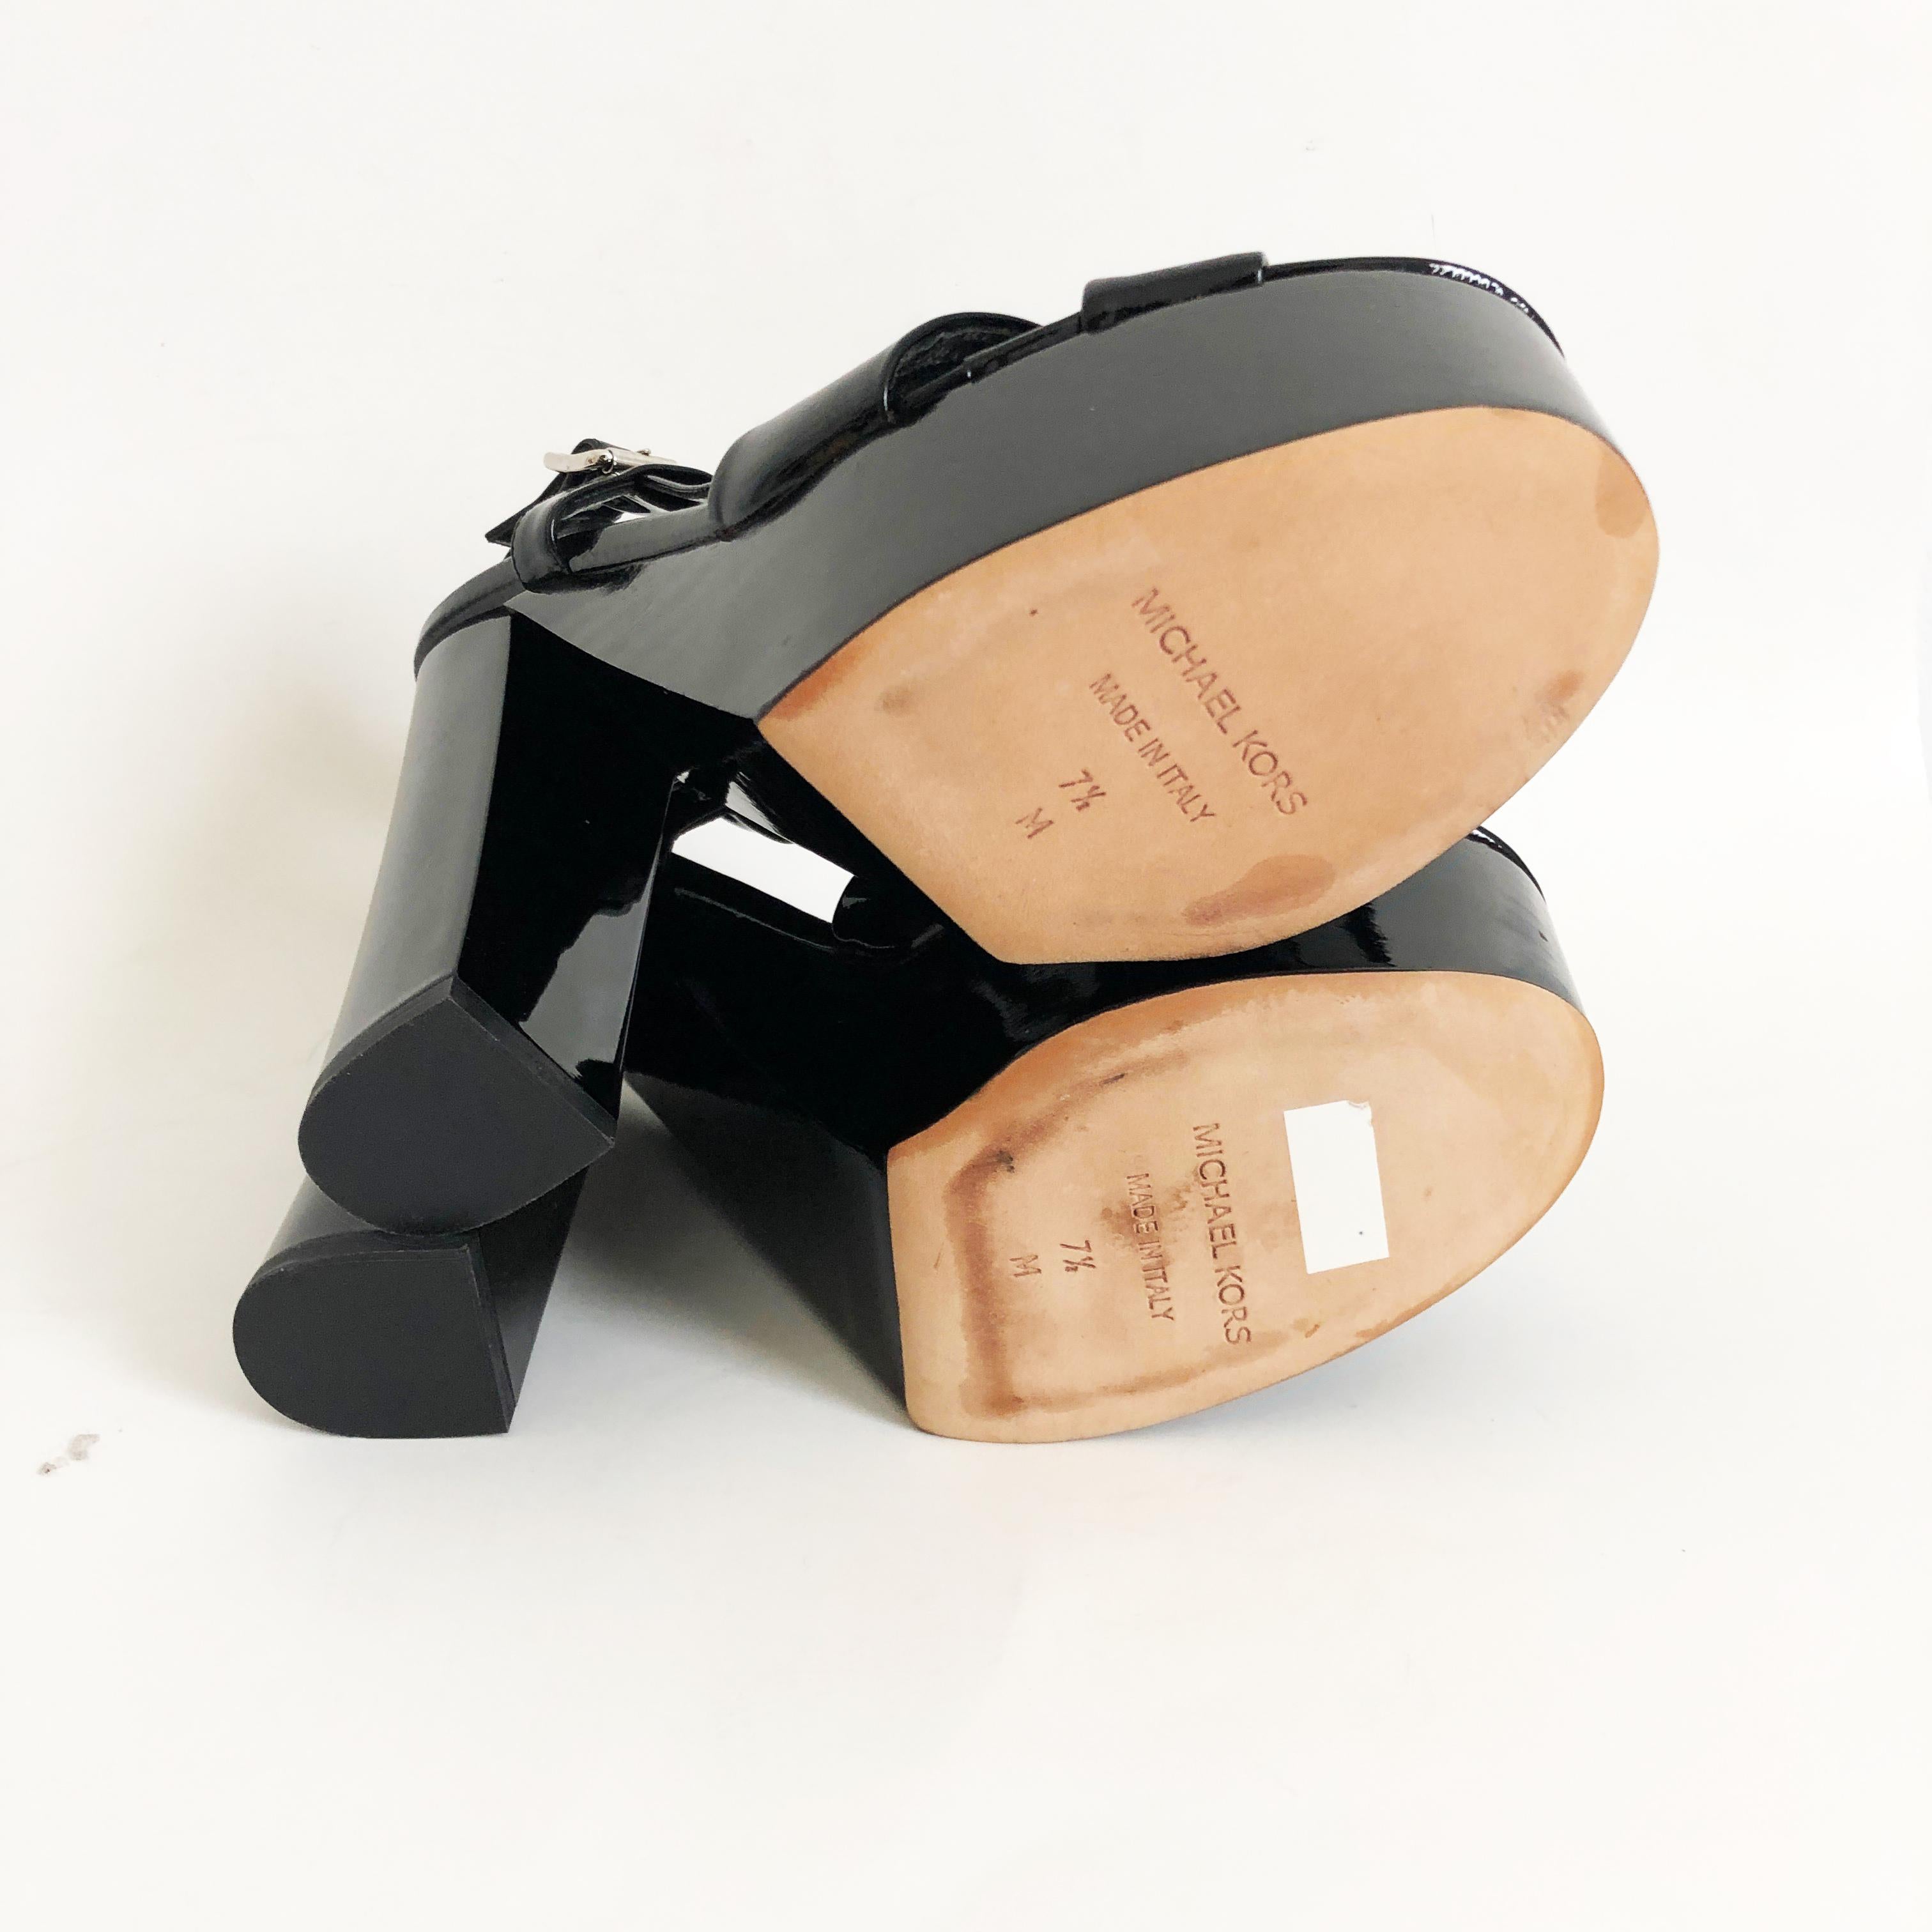 Michael Kors Black Patent Platforms Sandals Size 37.5 NOS NWOB For Sale 5